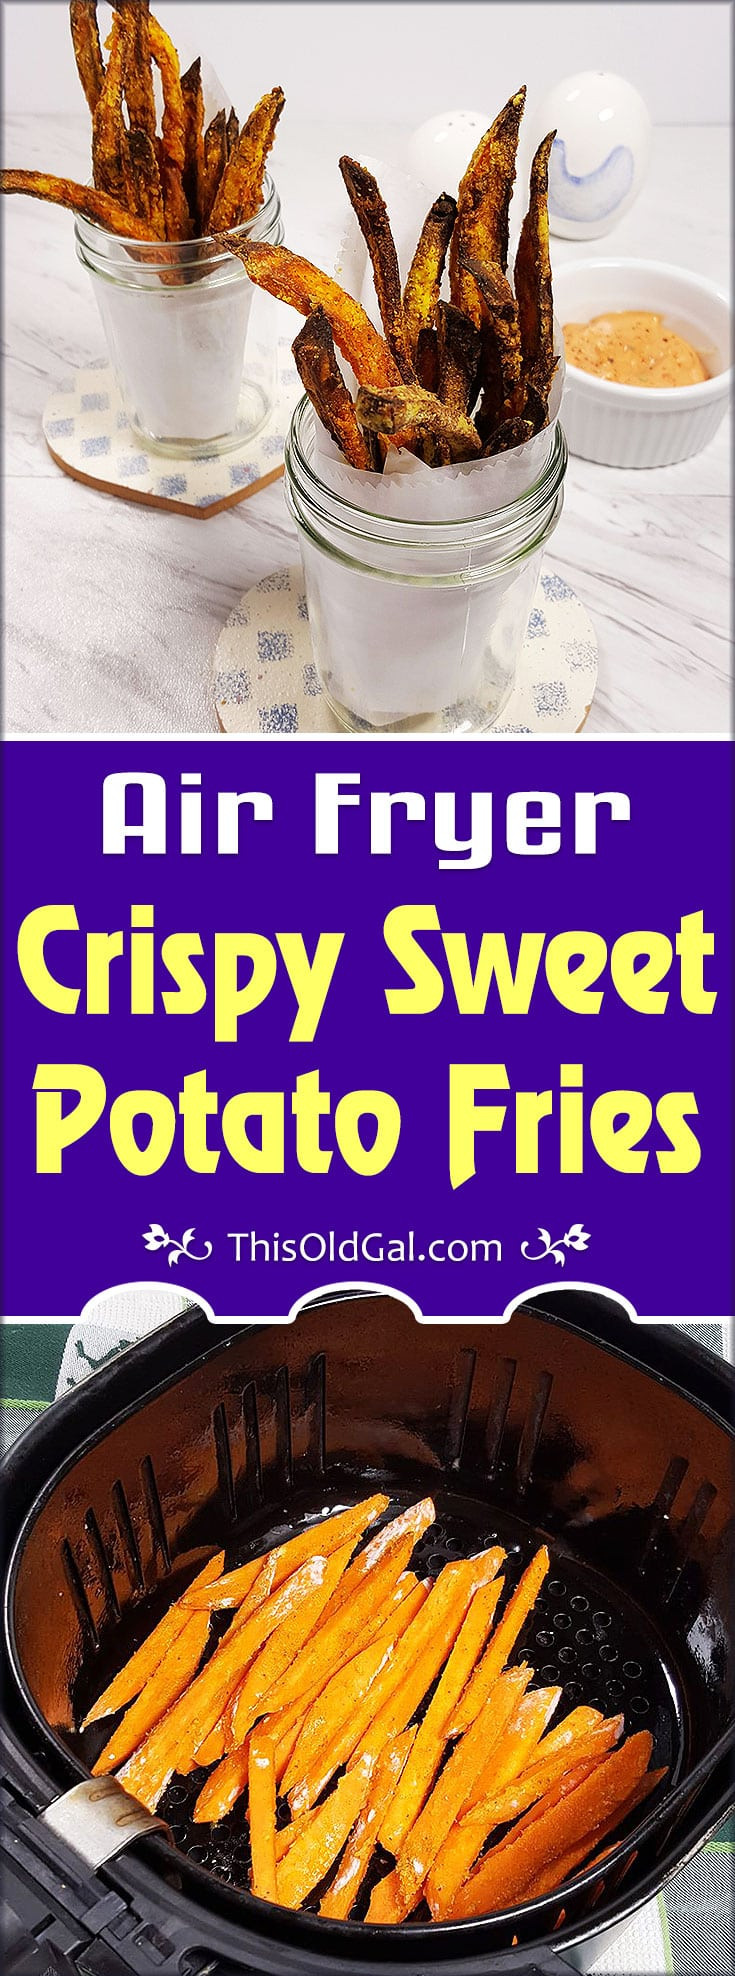 Sweet Potato Fries In Air Fryer
 Air Fryer Crispy Sweet Potato Fries